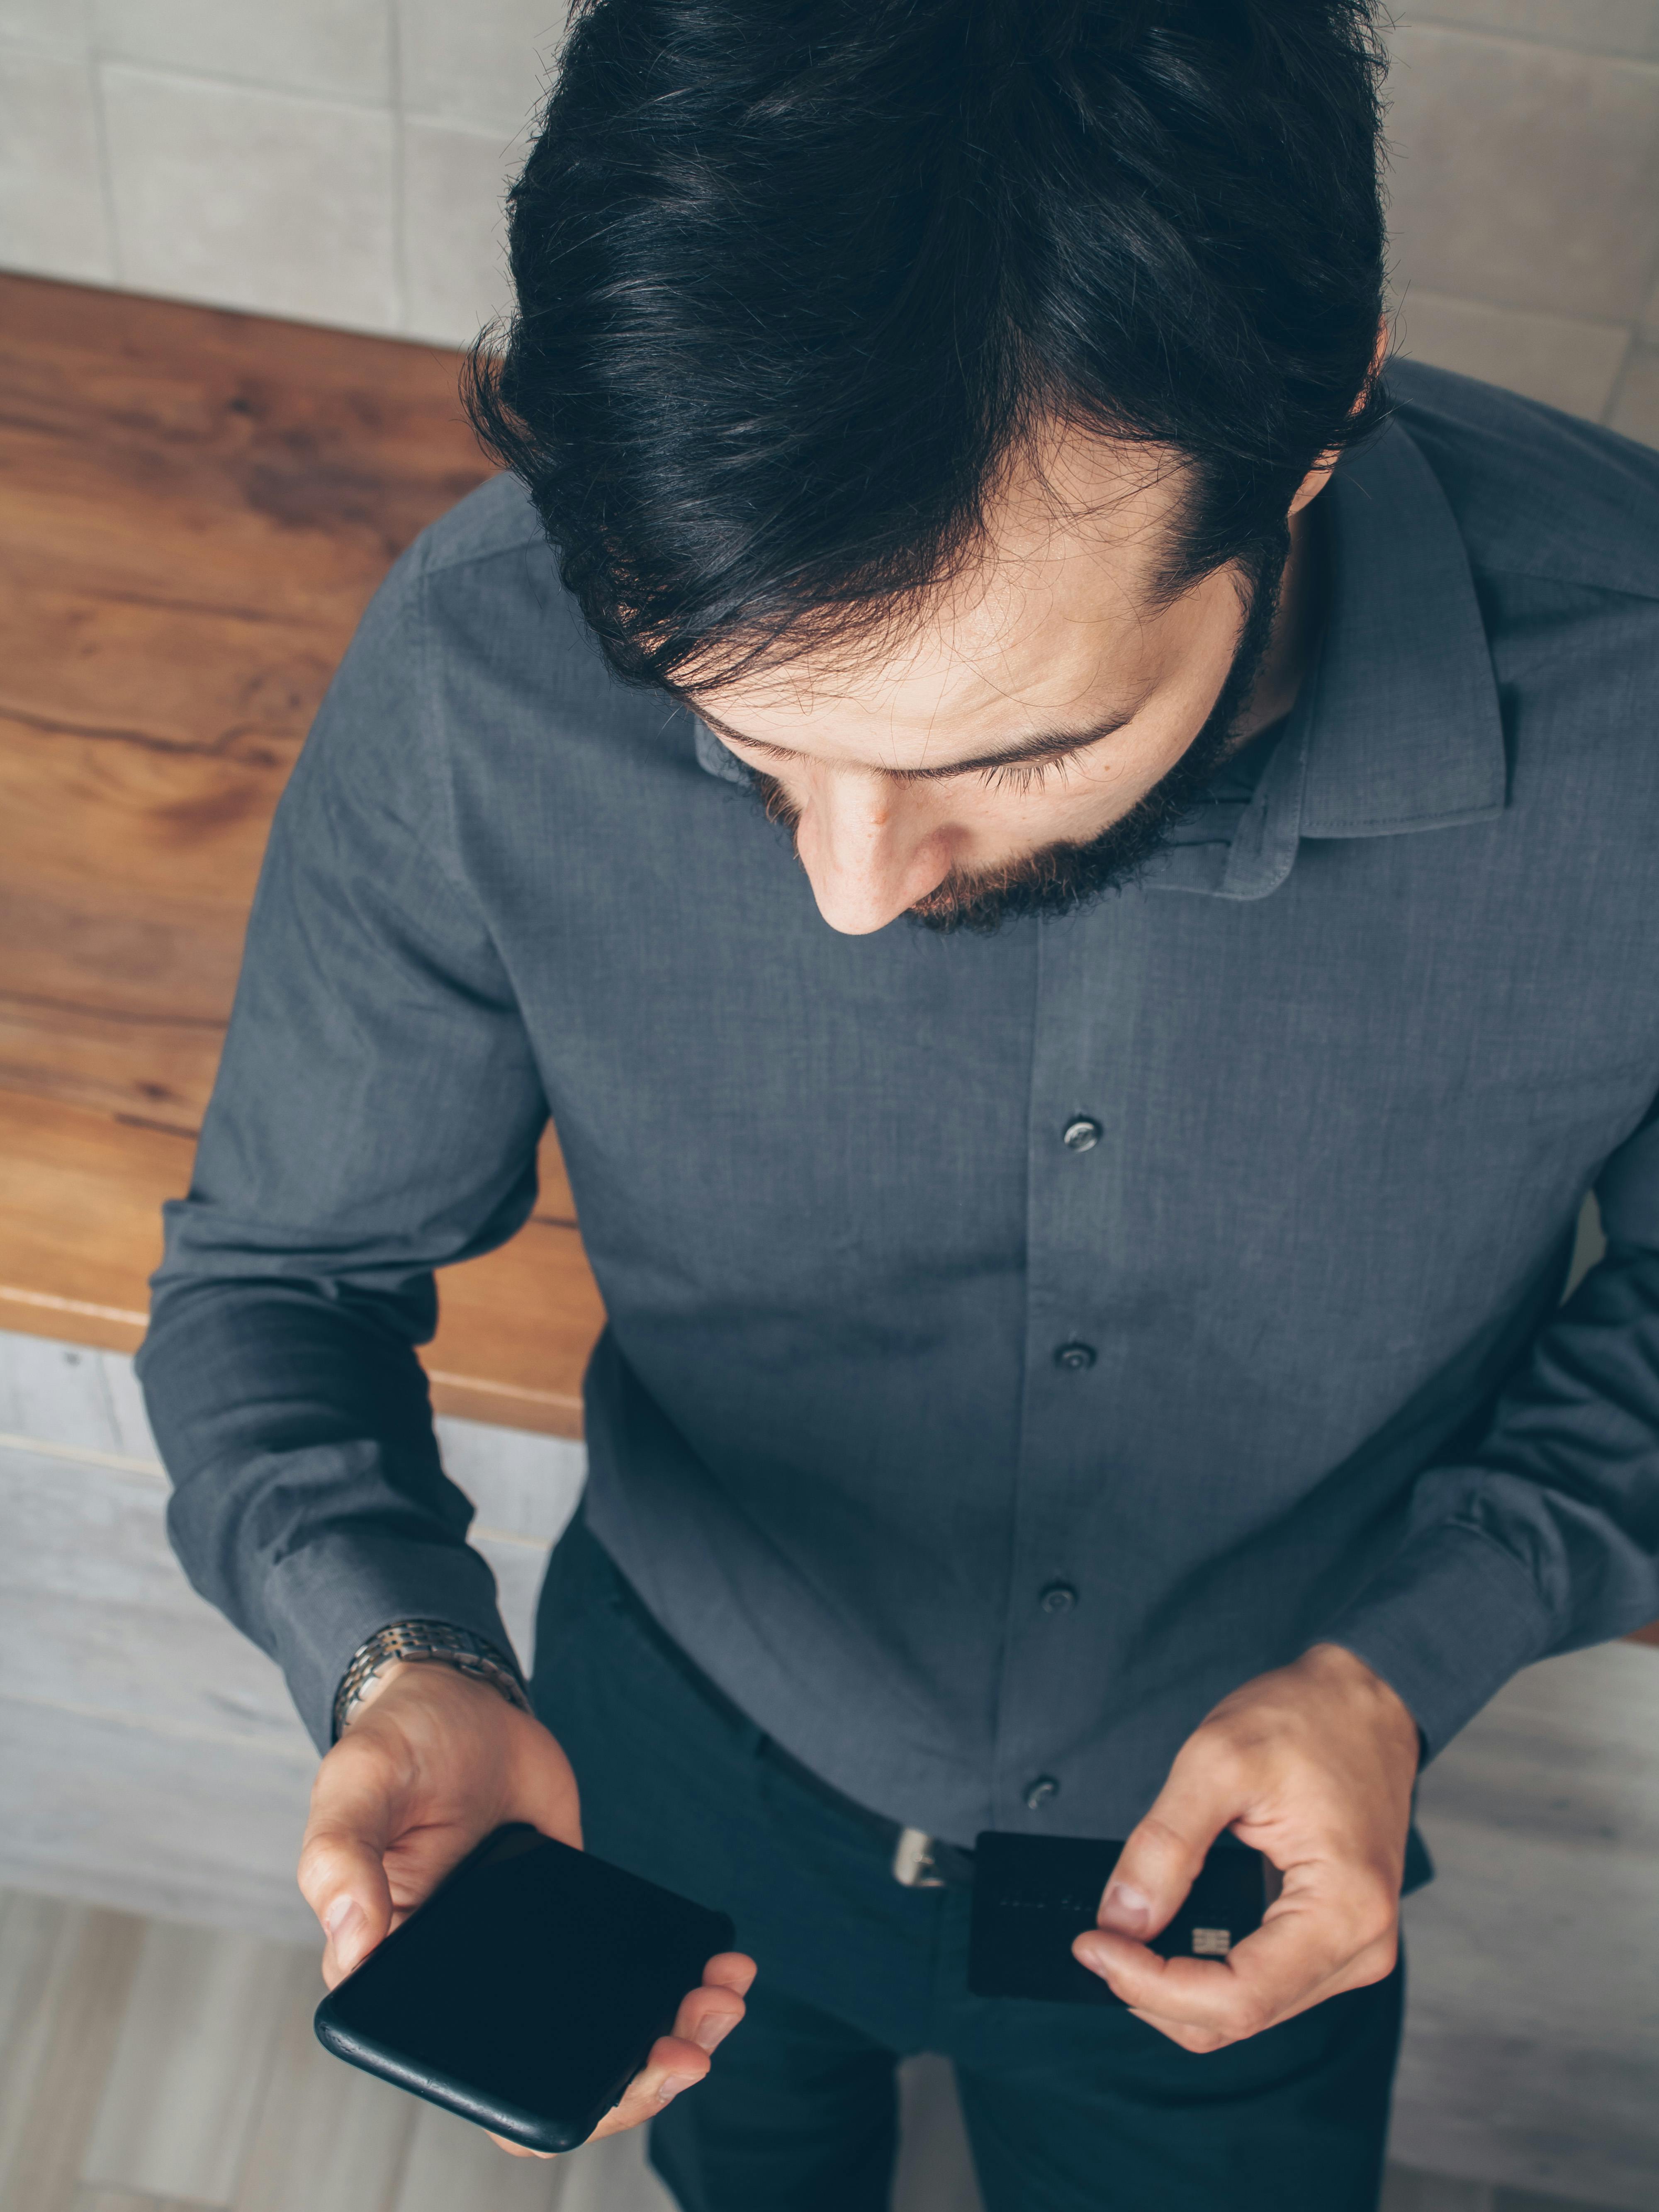 man in gray dress shirt holding black smartphone